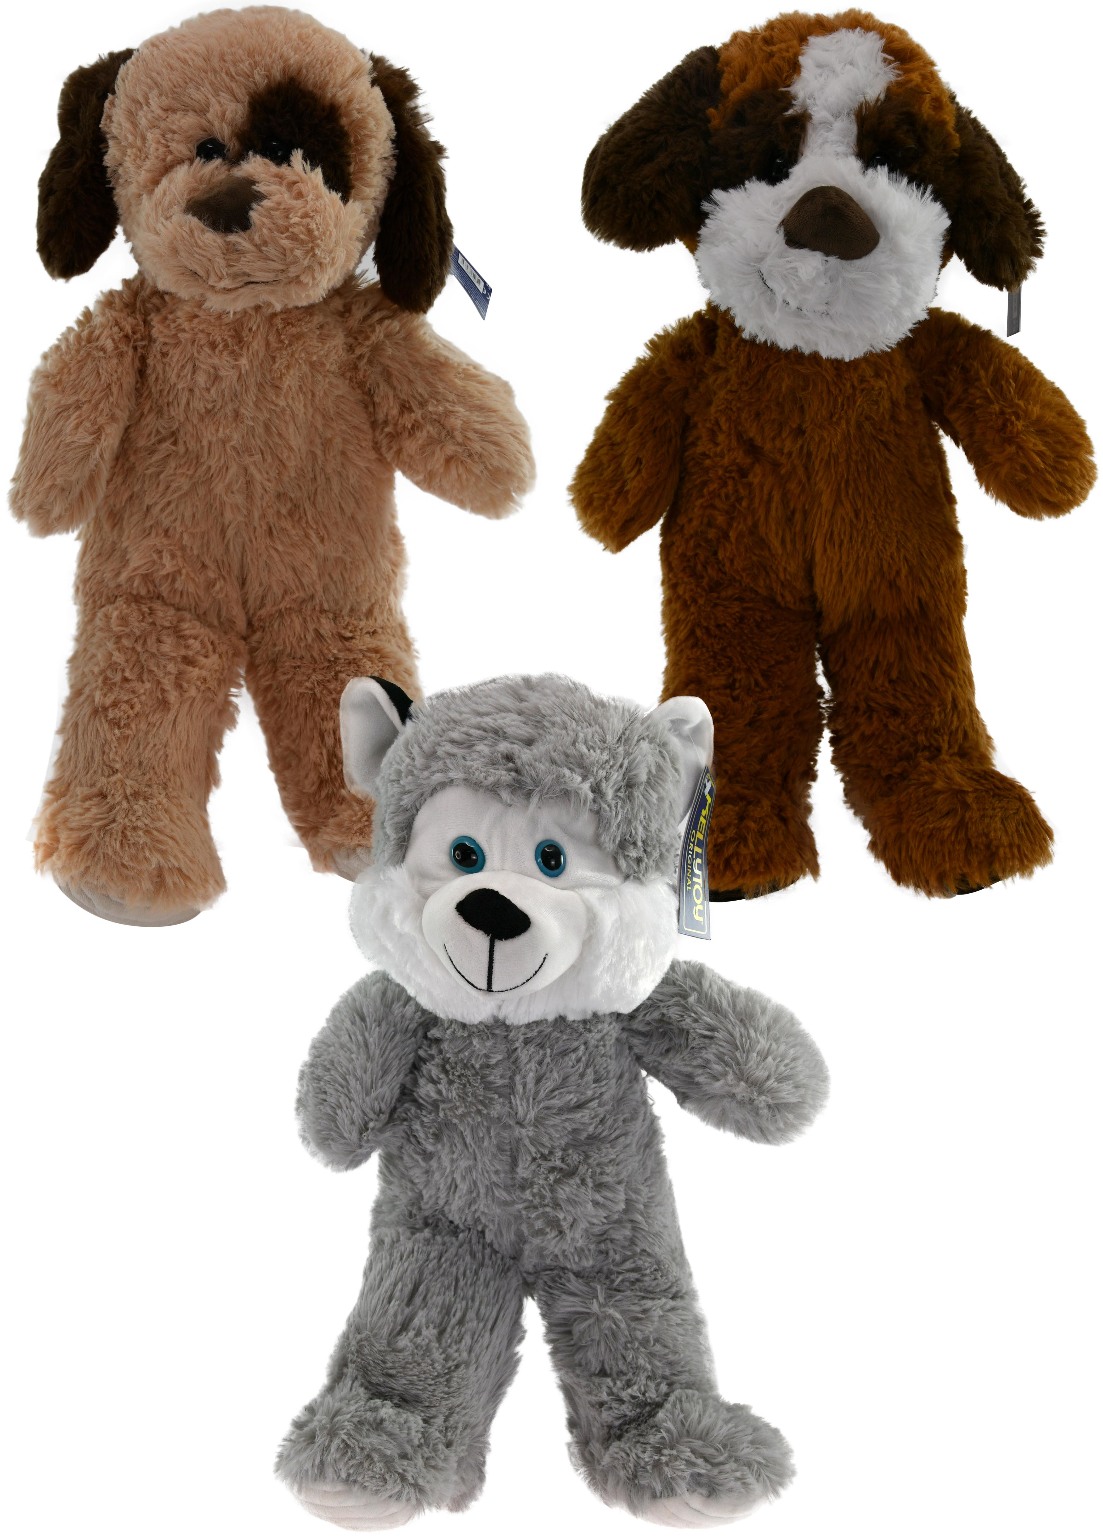 stuffed animals for sale in bulk